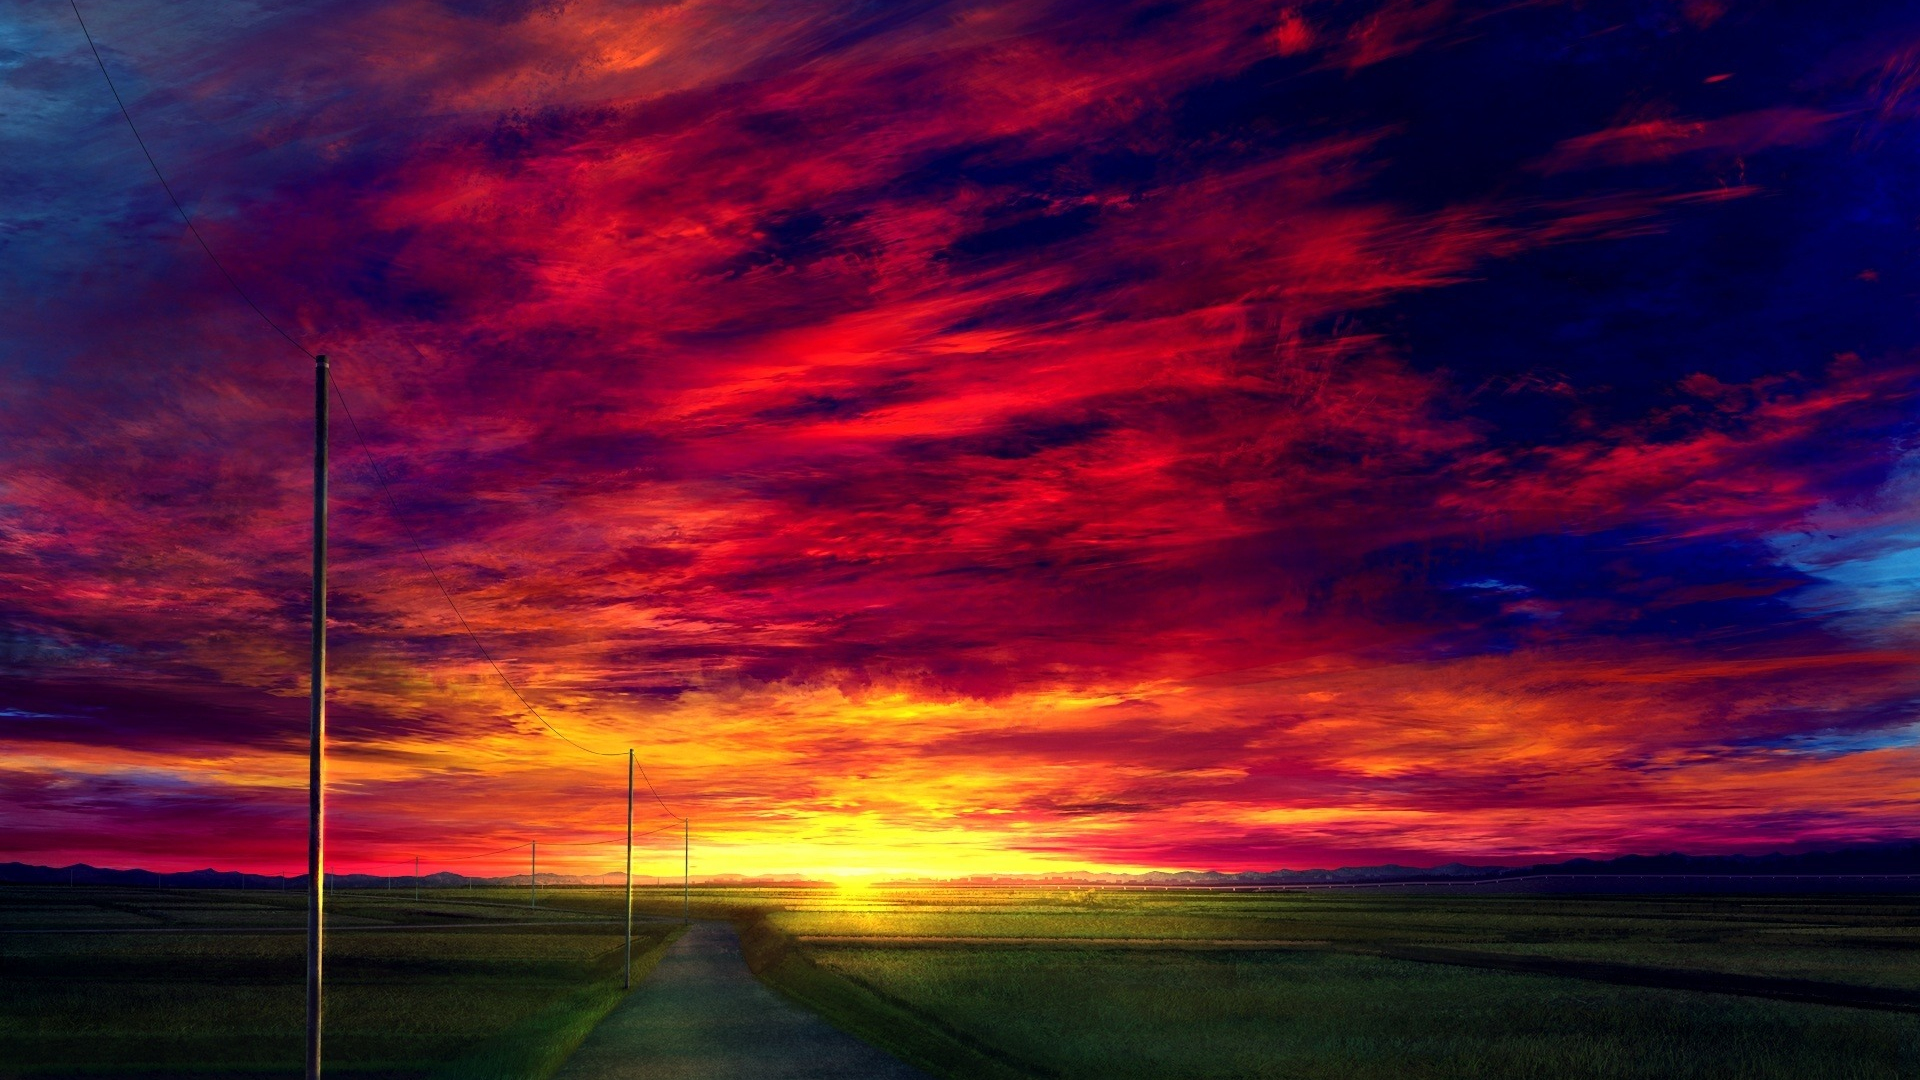 Download 1920x1080 Wallpaper Sunset Road Landscape Anime